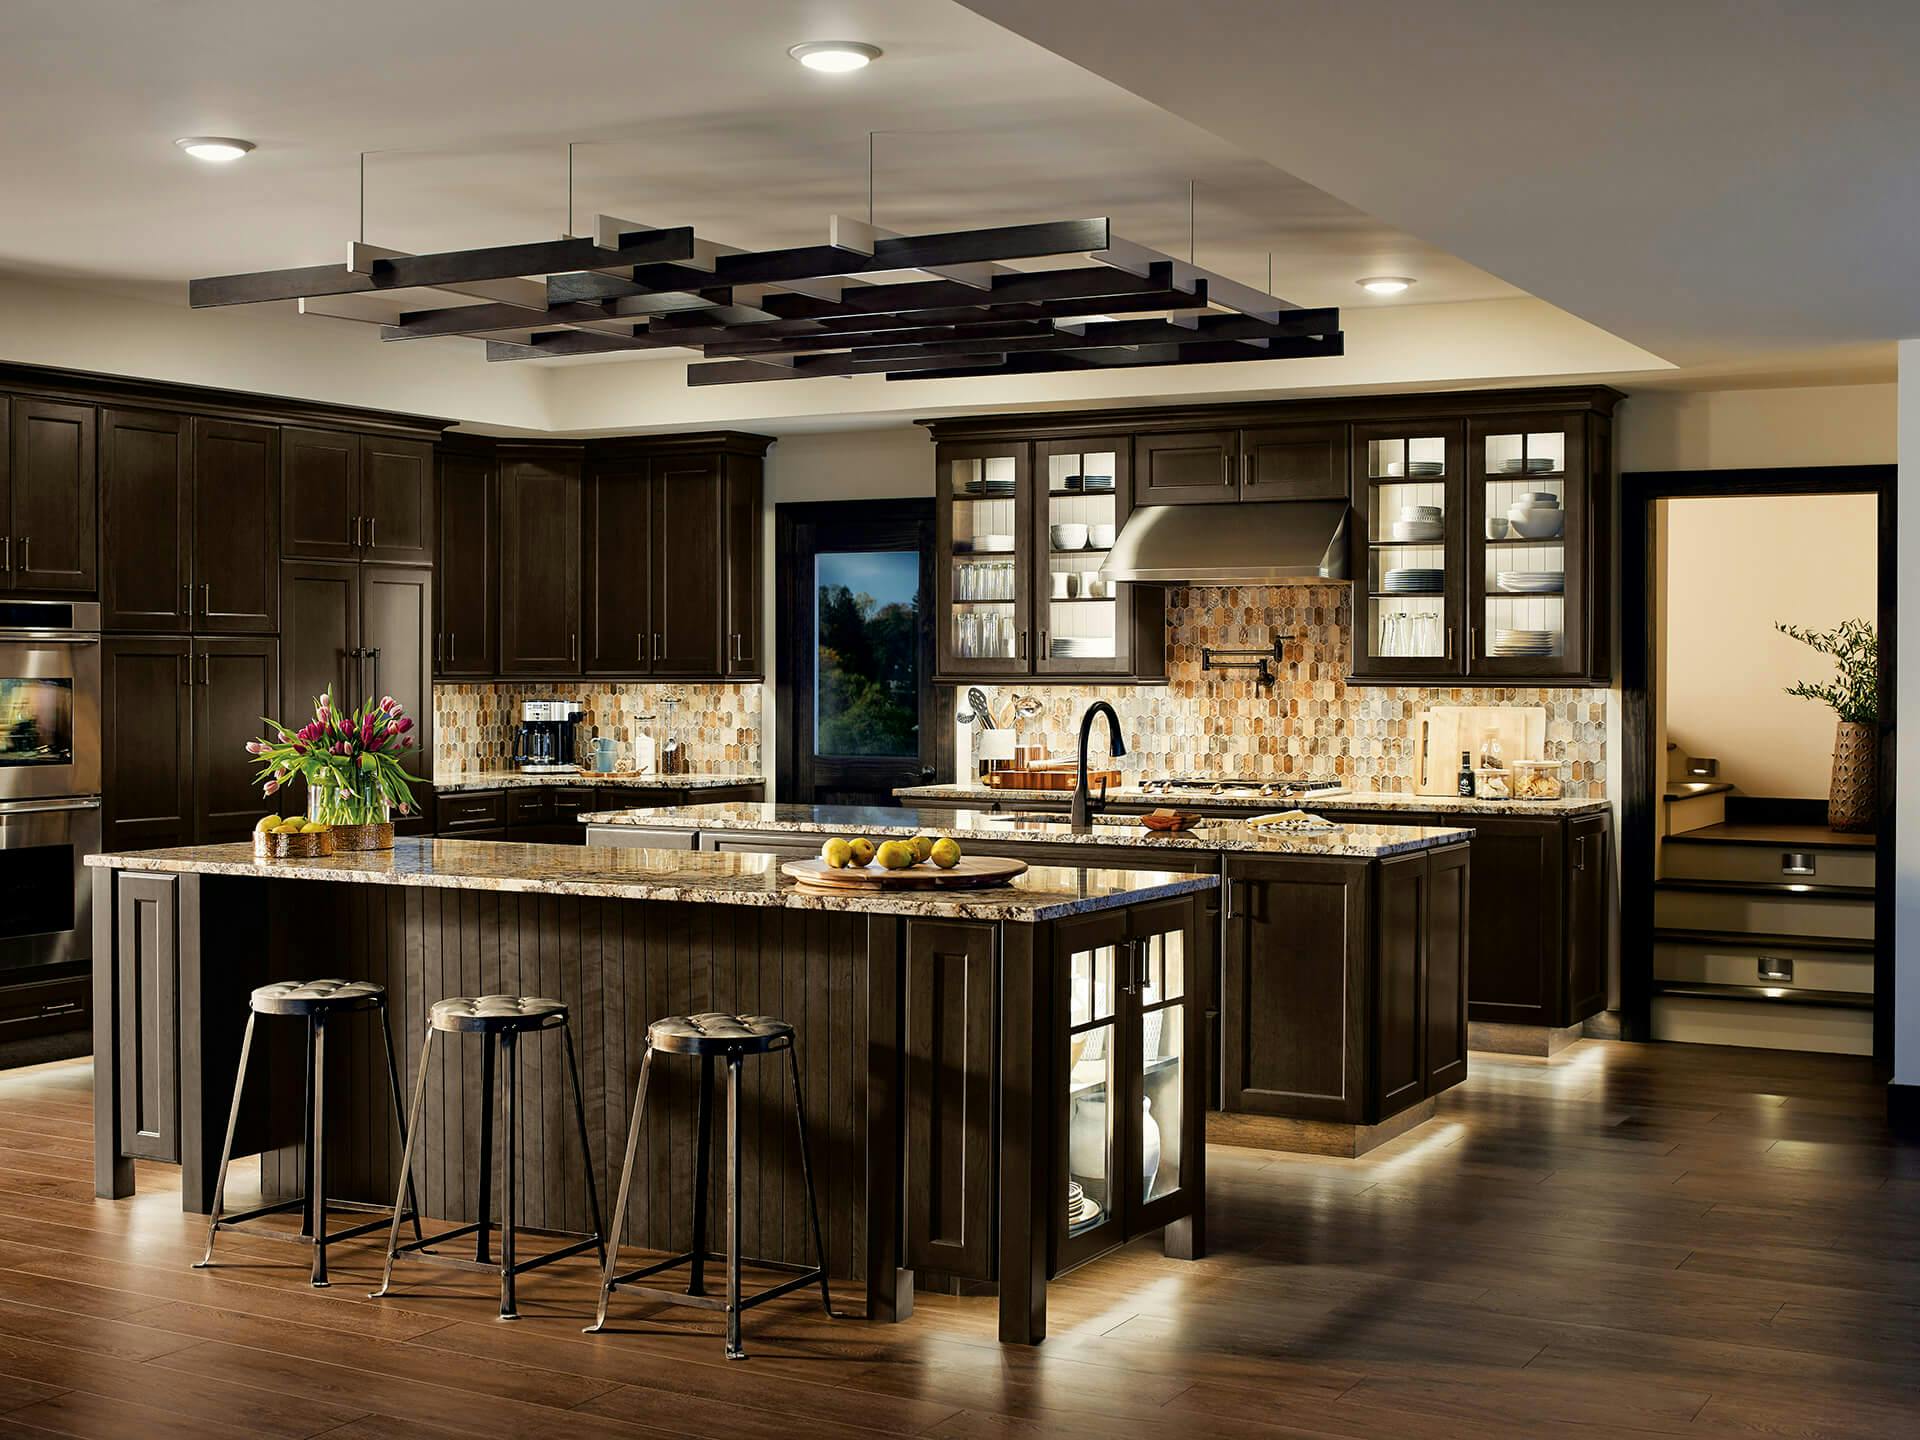 Large multi island kitchen with dark wood cabinets